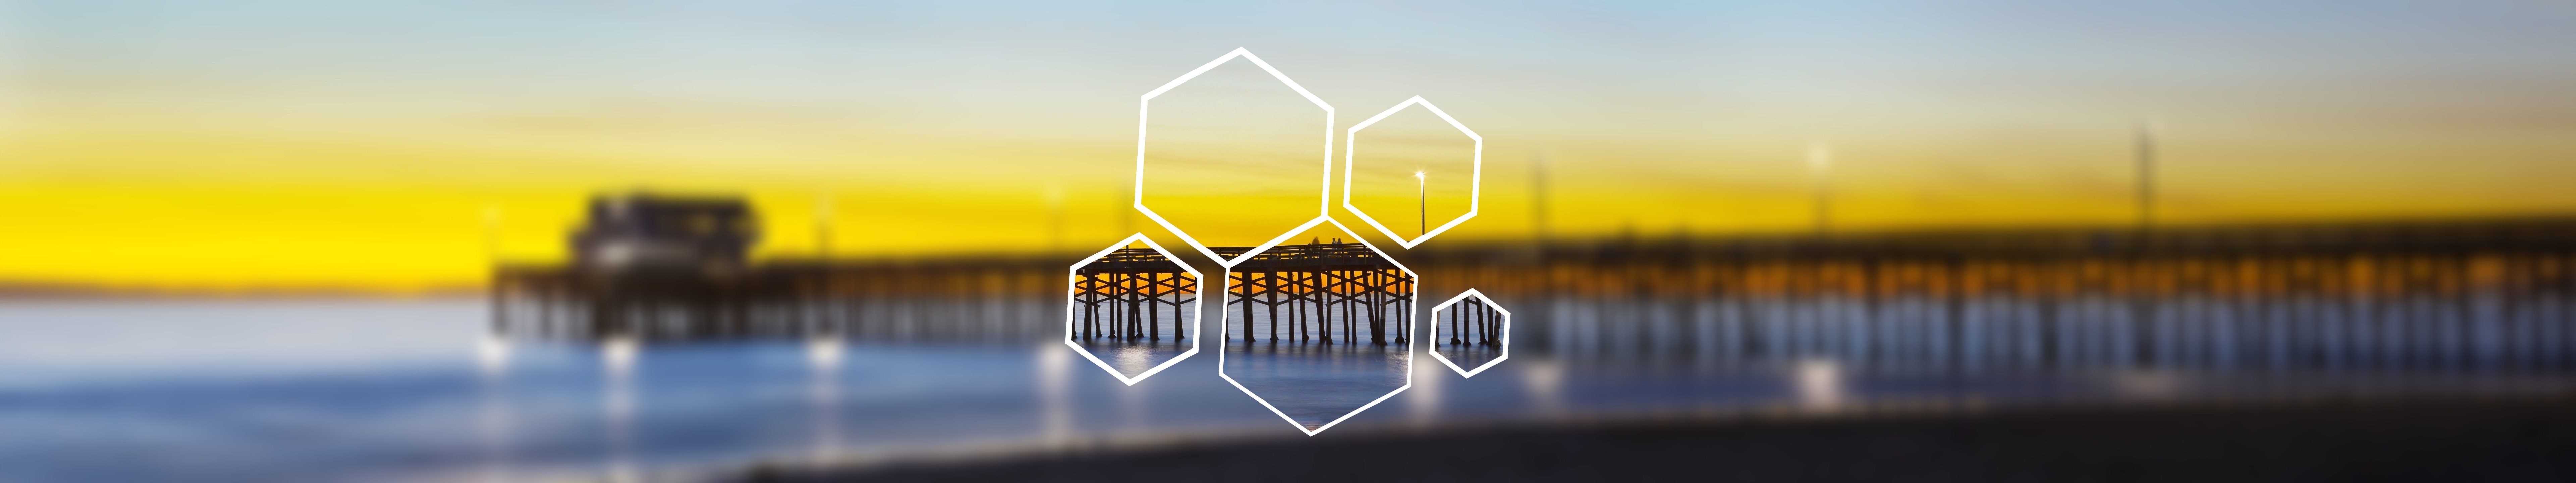 General 7680x1440 ultrawide hexagon pier sunset sea blurred geometric figures digital art polyscape